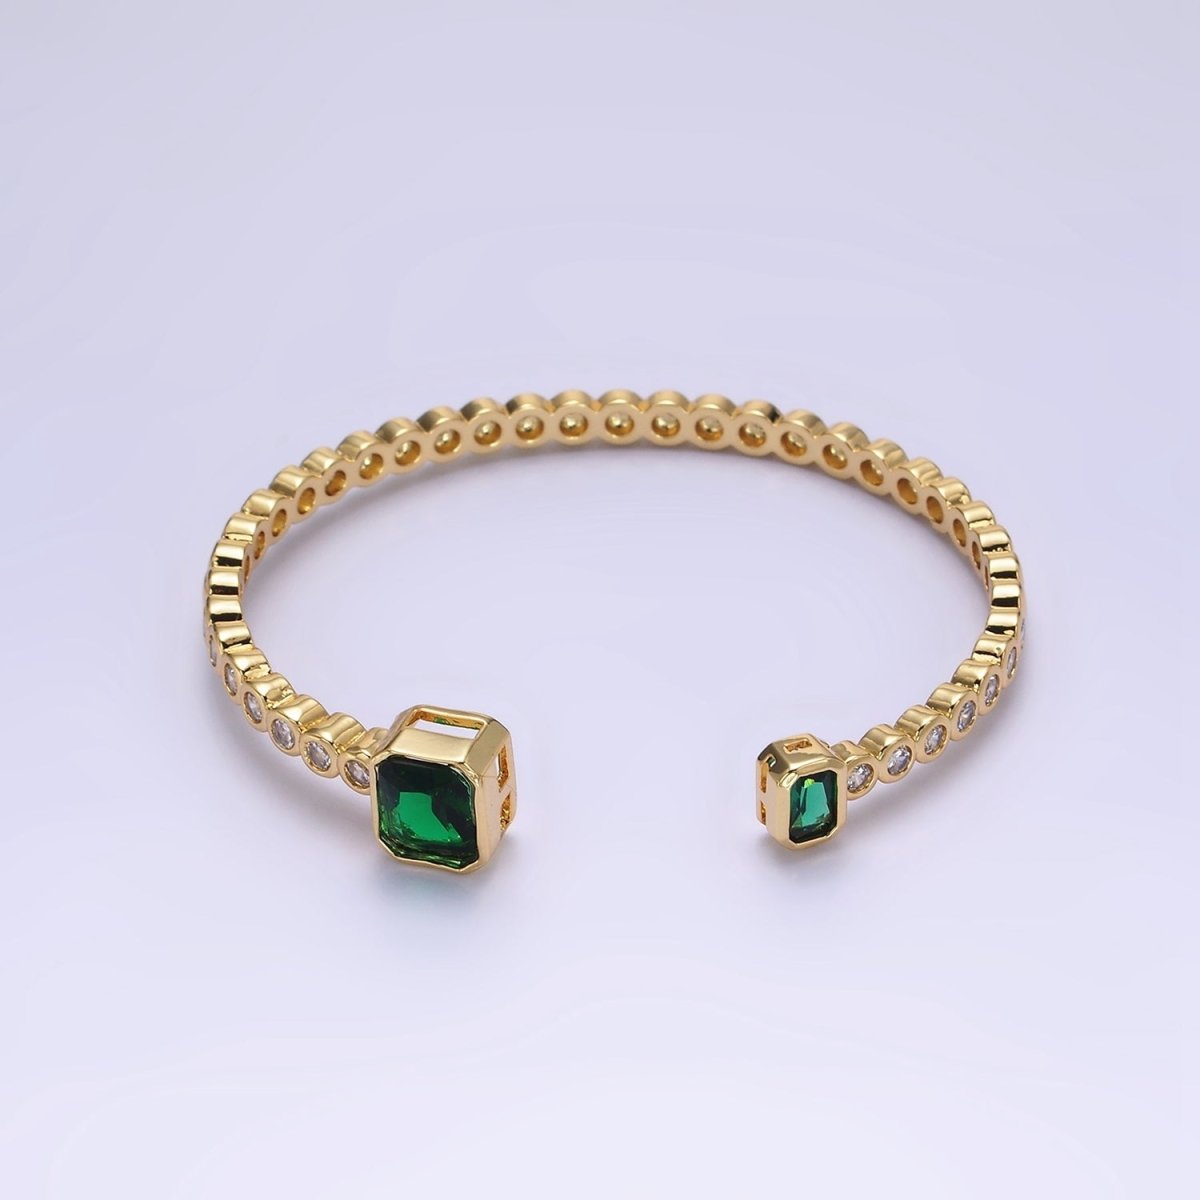 14K Gold Filled Green, Fuchsia Baguette Round CZ Lined Cuff Bracelet in Silver & Gold | WA-1974 - WA-1977 Clearance Pricing - DLUXCA